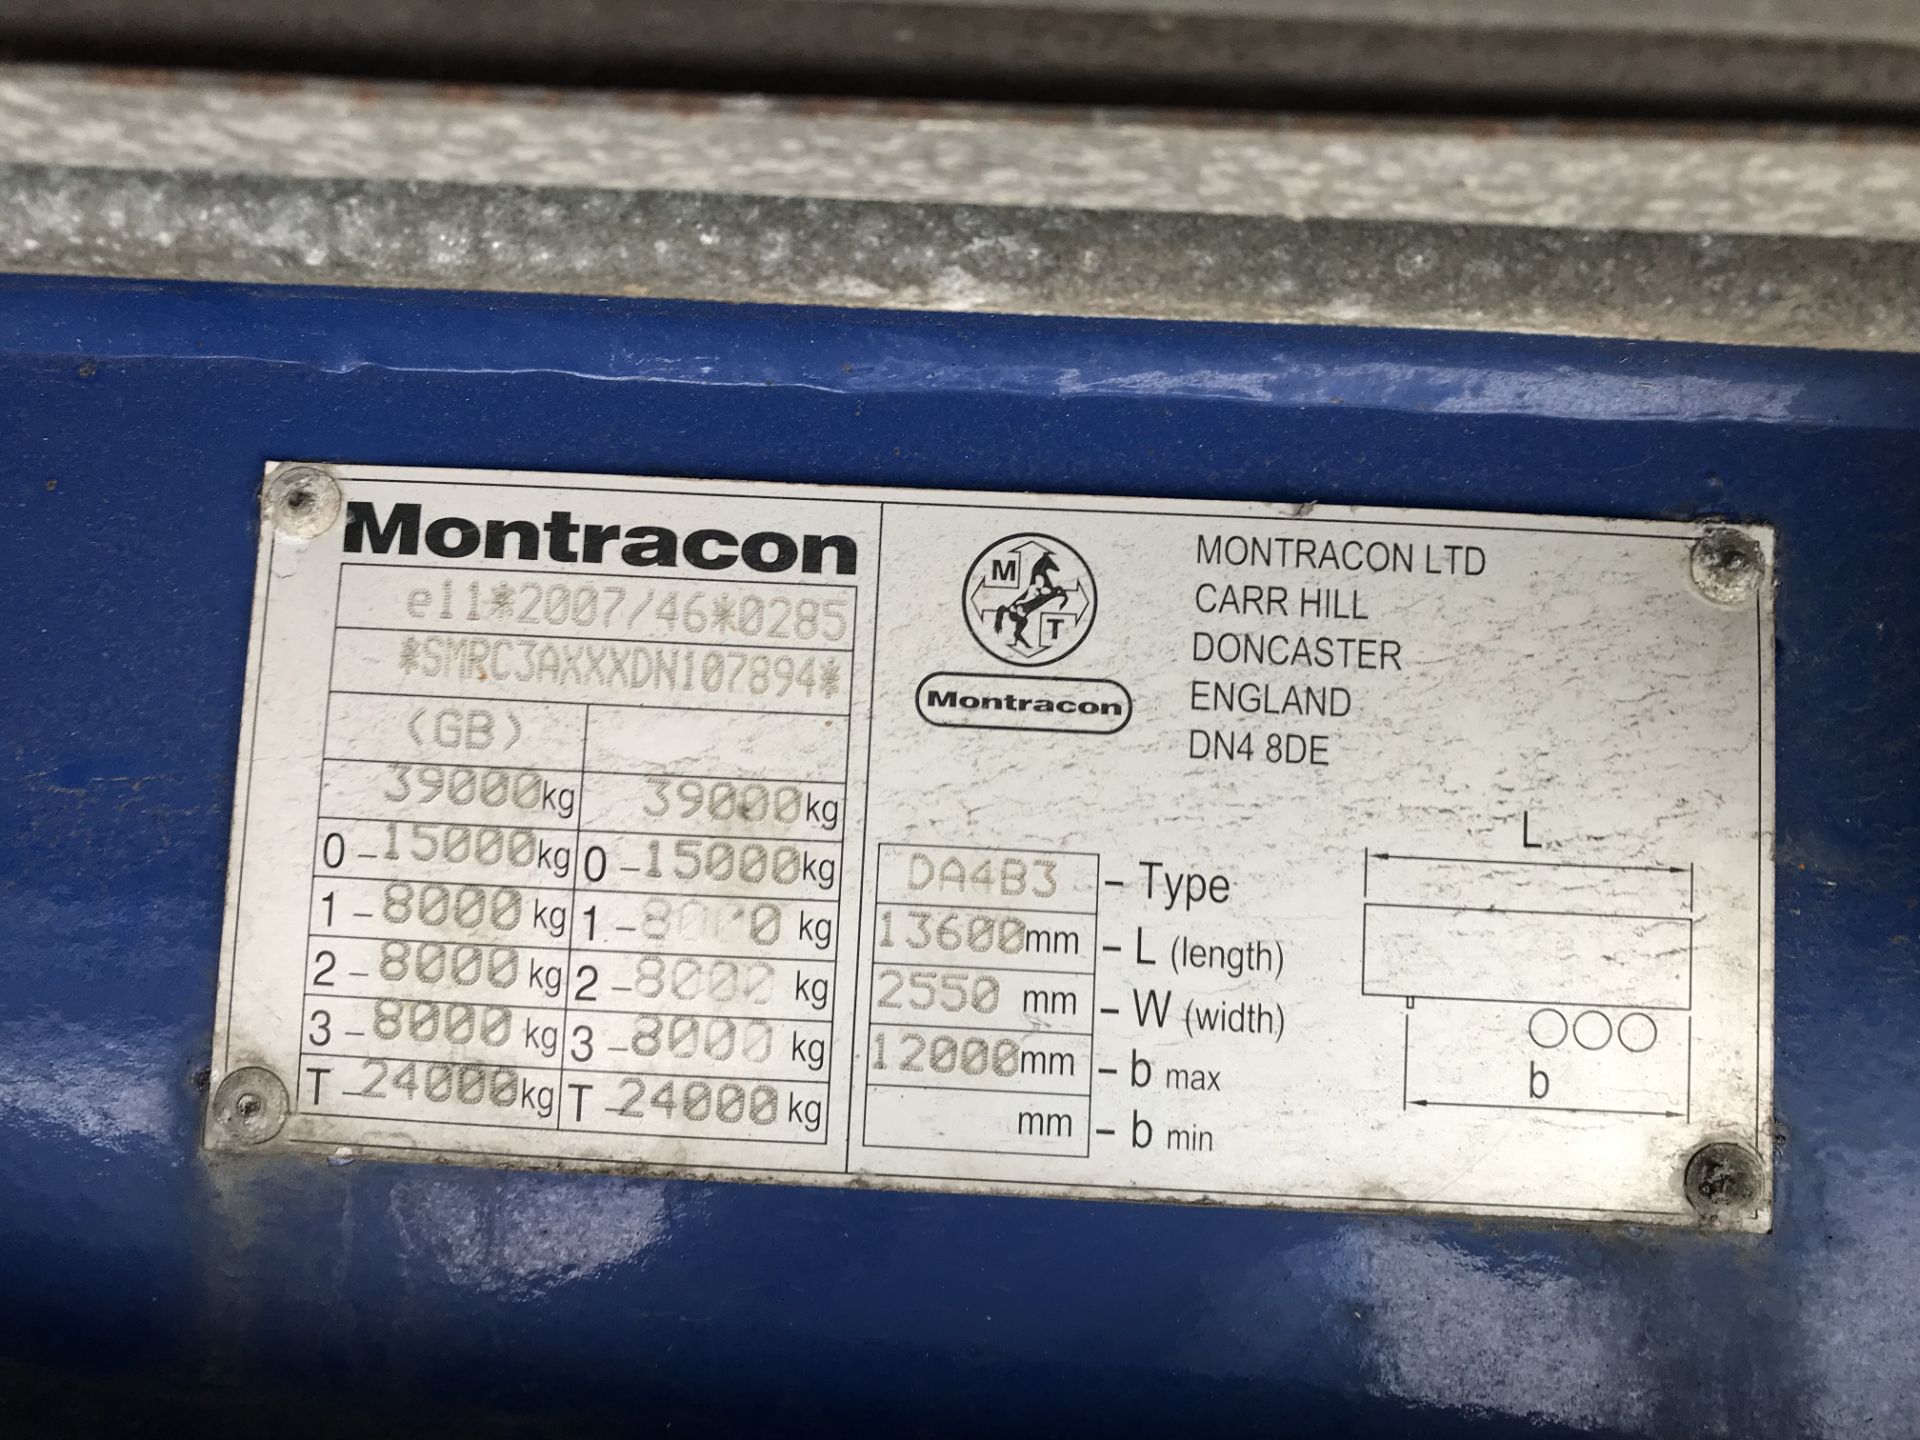 Montracon 13.6m Tri-Axle Curtainside Single Deck Semi-Trailer, chassis no. SMRC3AXXXDN107894, ID no. - Bild 6 aus 6